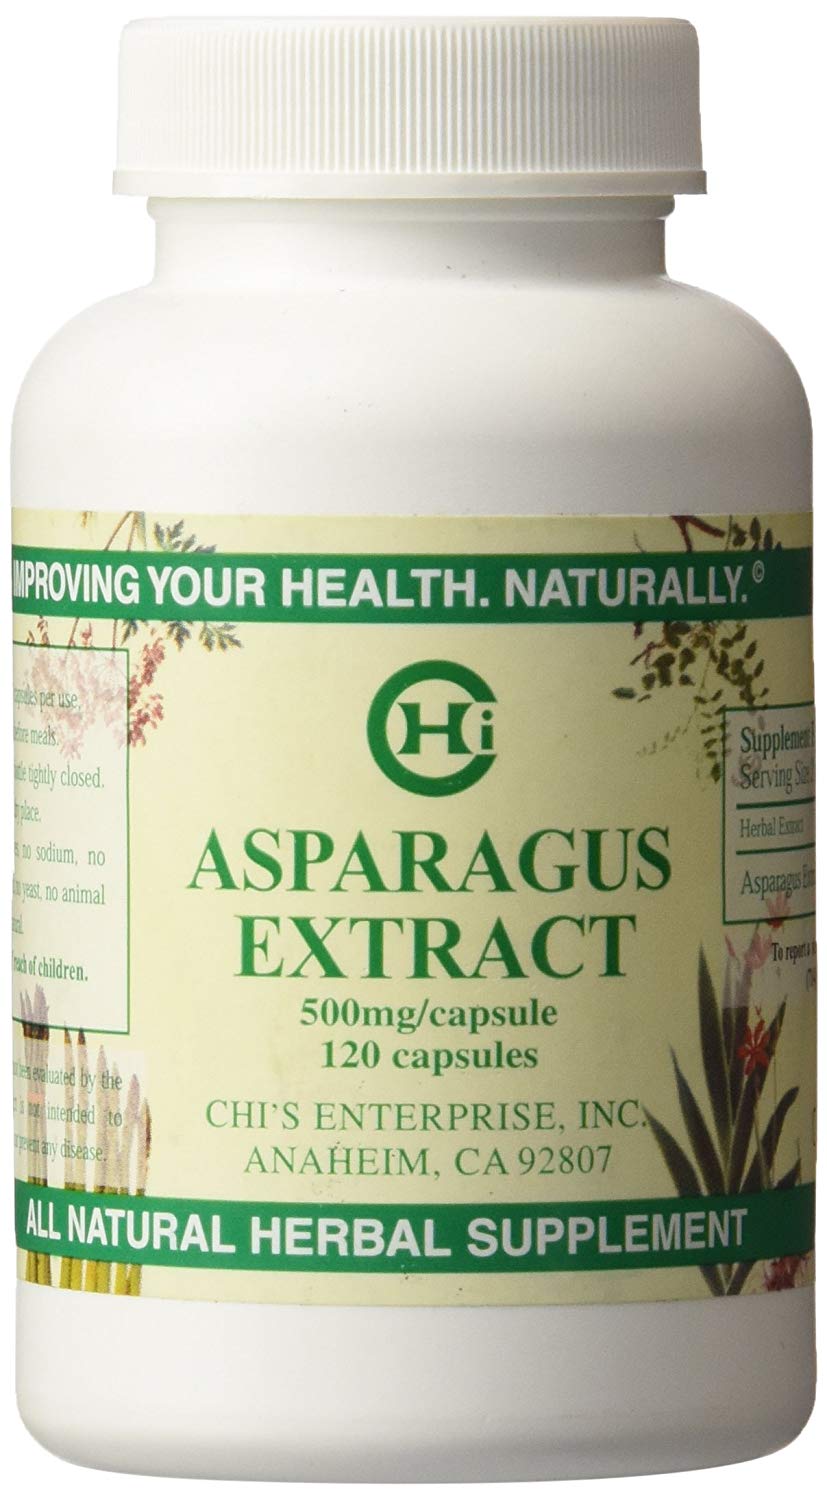 Chi's Enterprise Asparagus Extract (120 Caps)